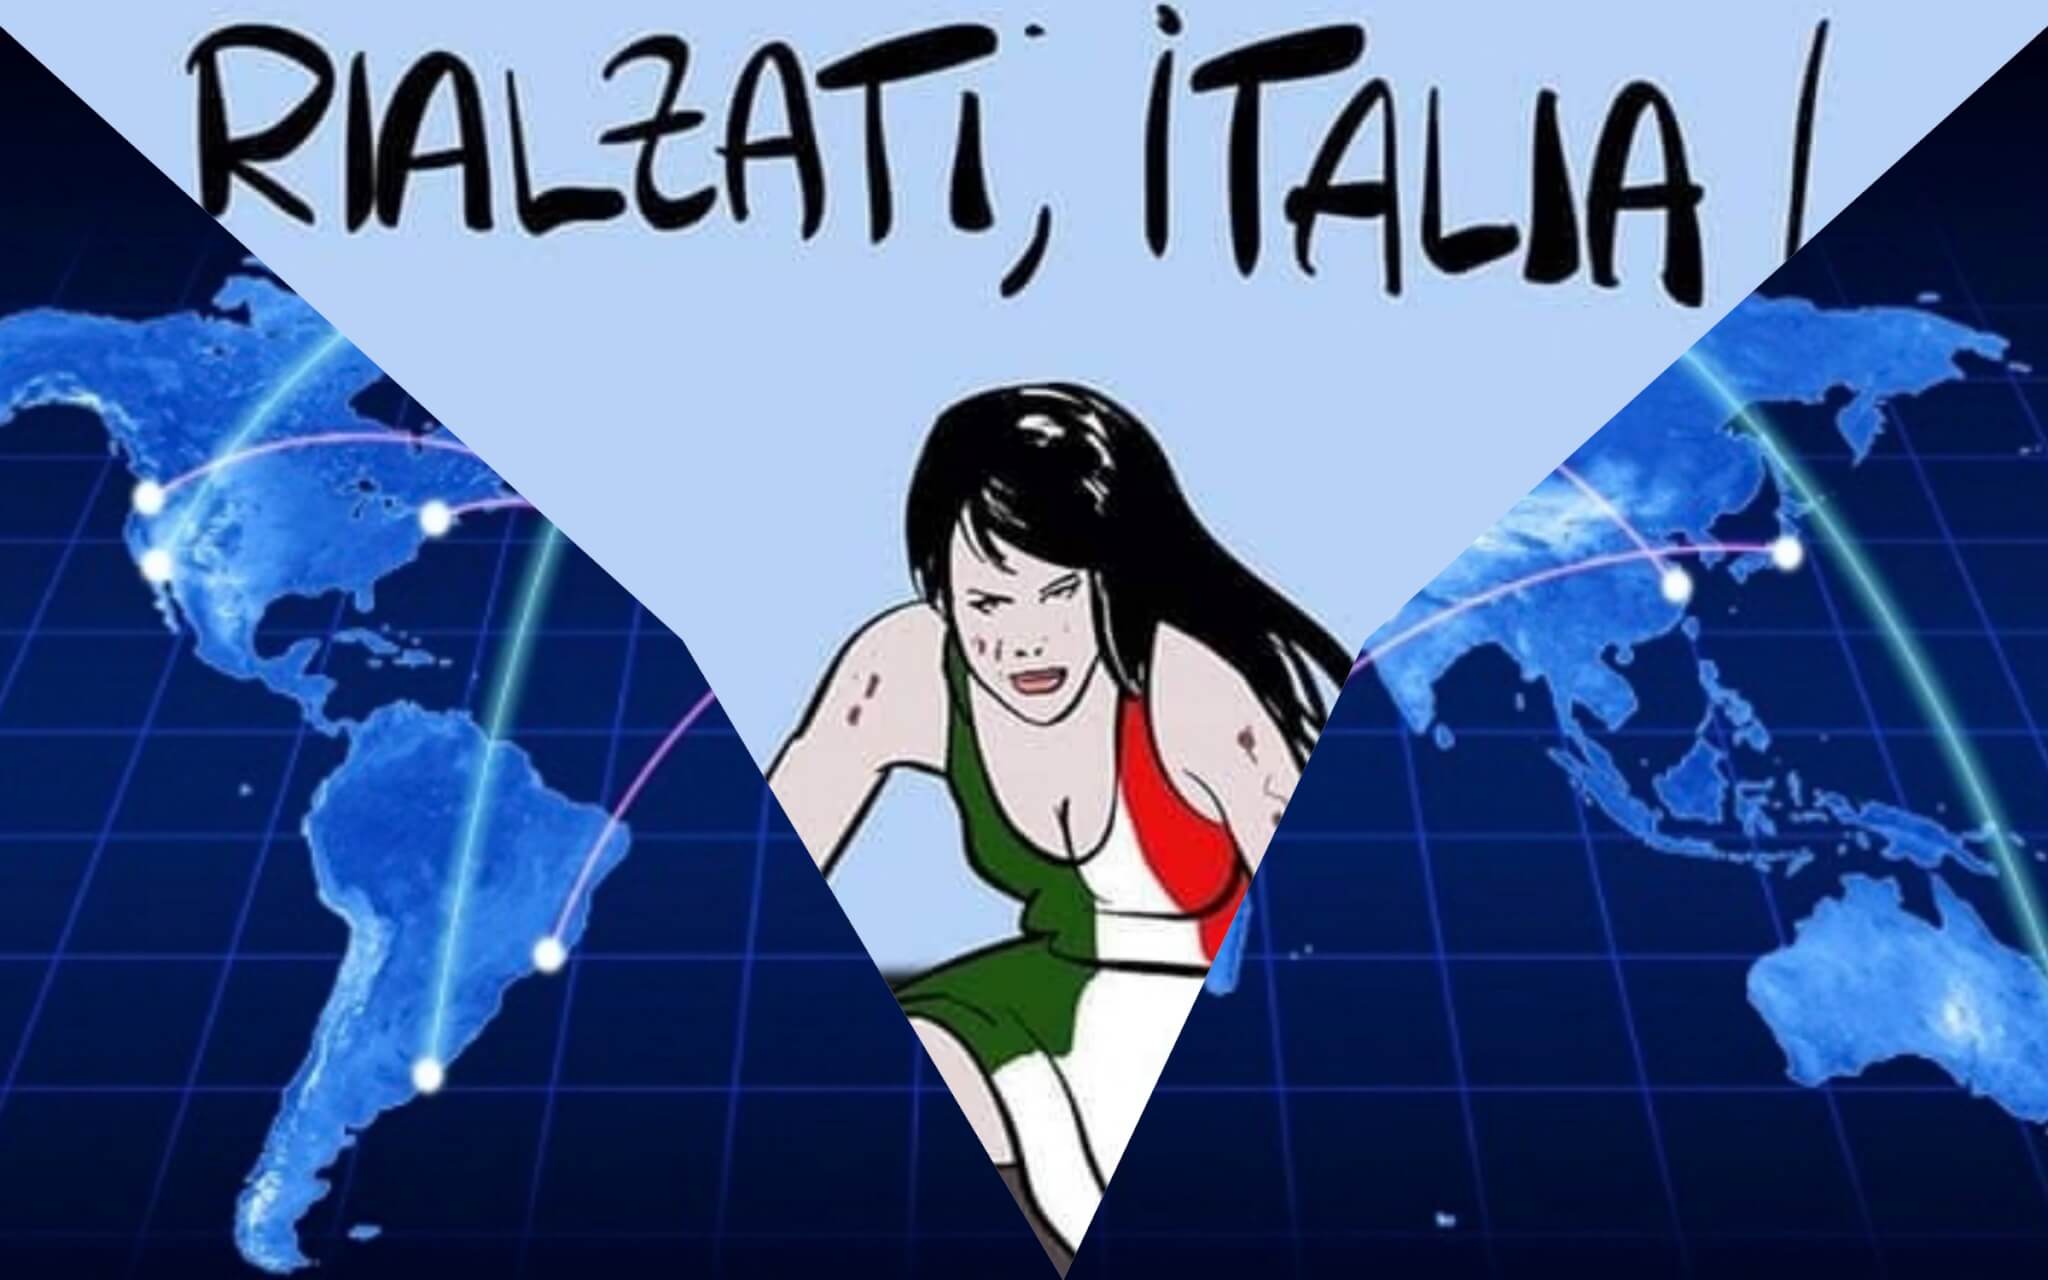 Rialzati Italia!